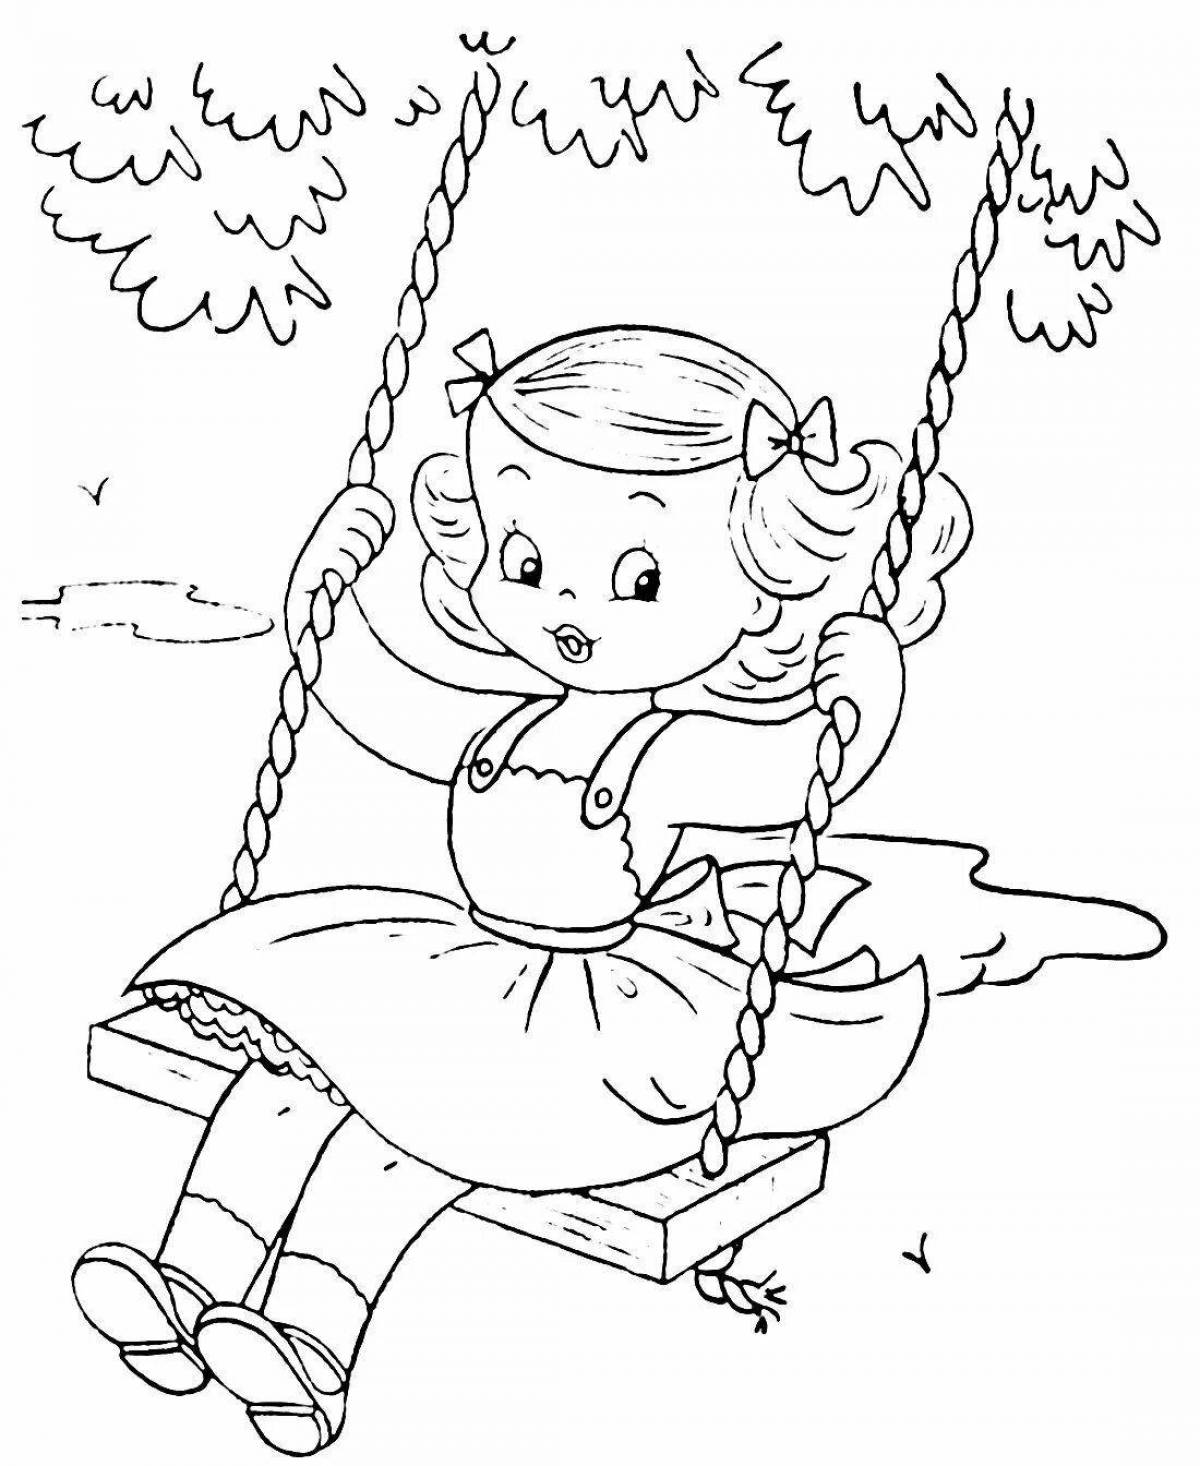 Fun swing coloring for kids